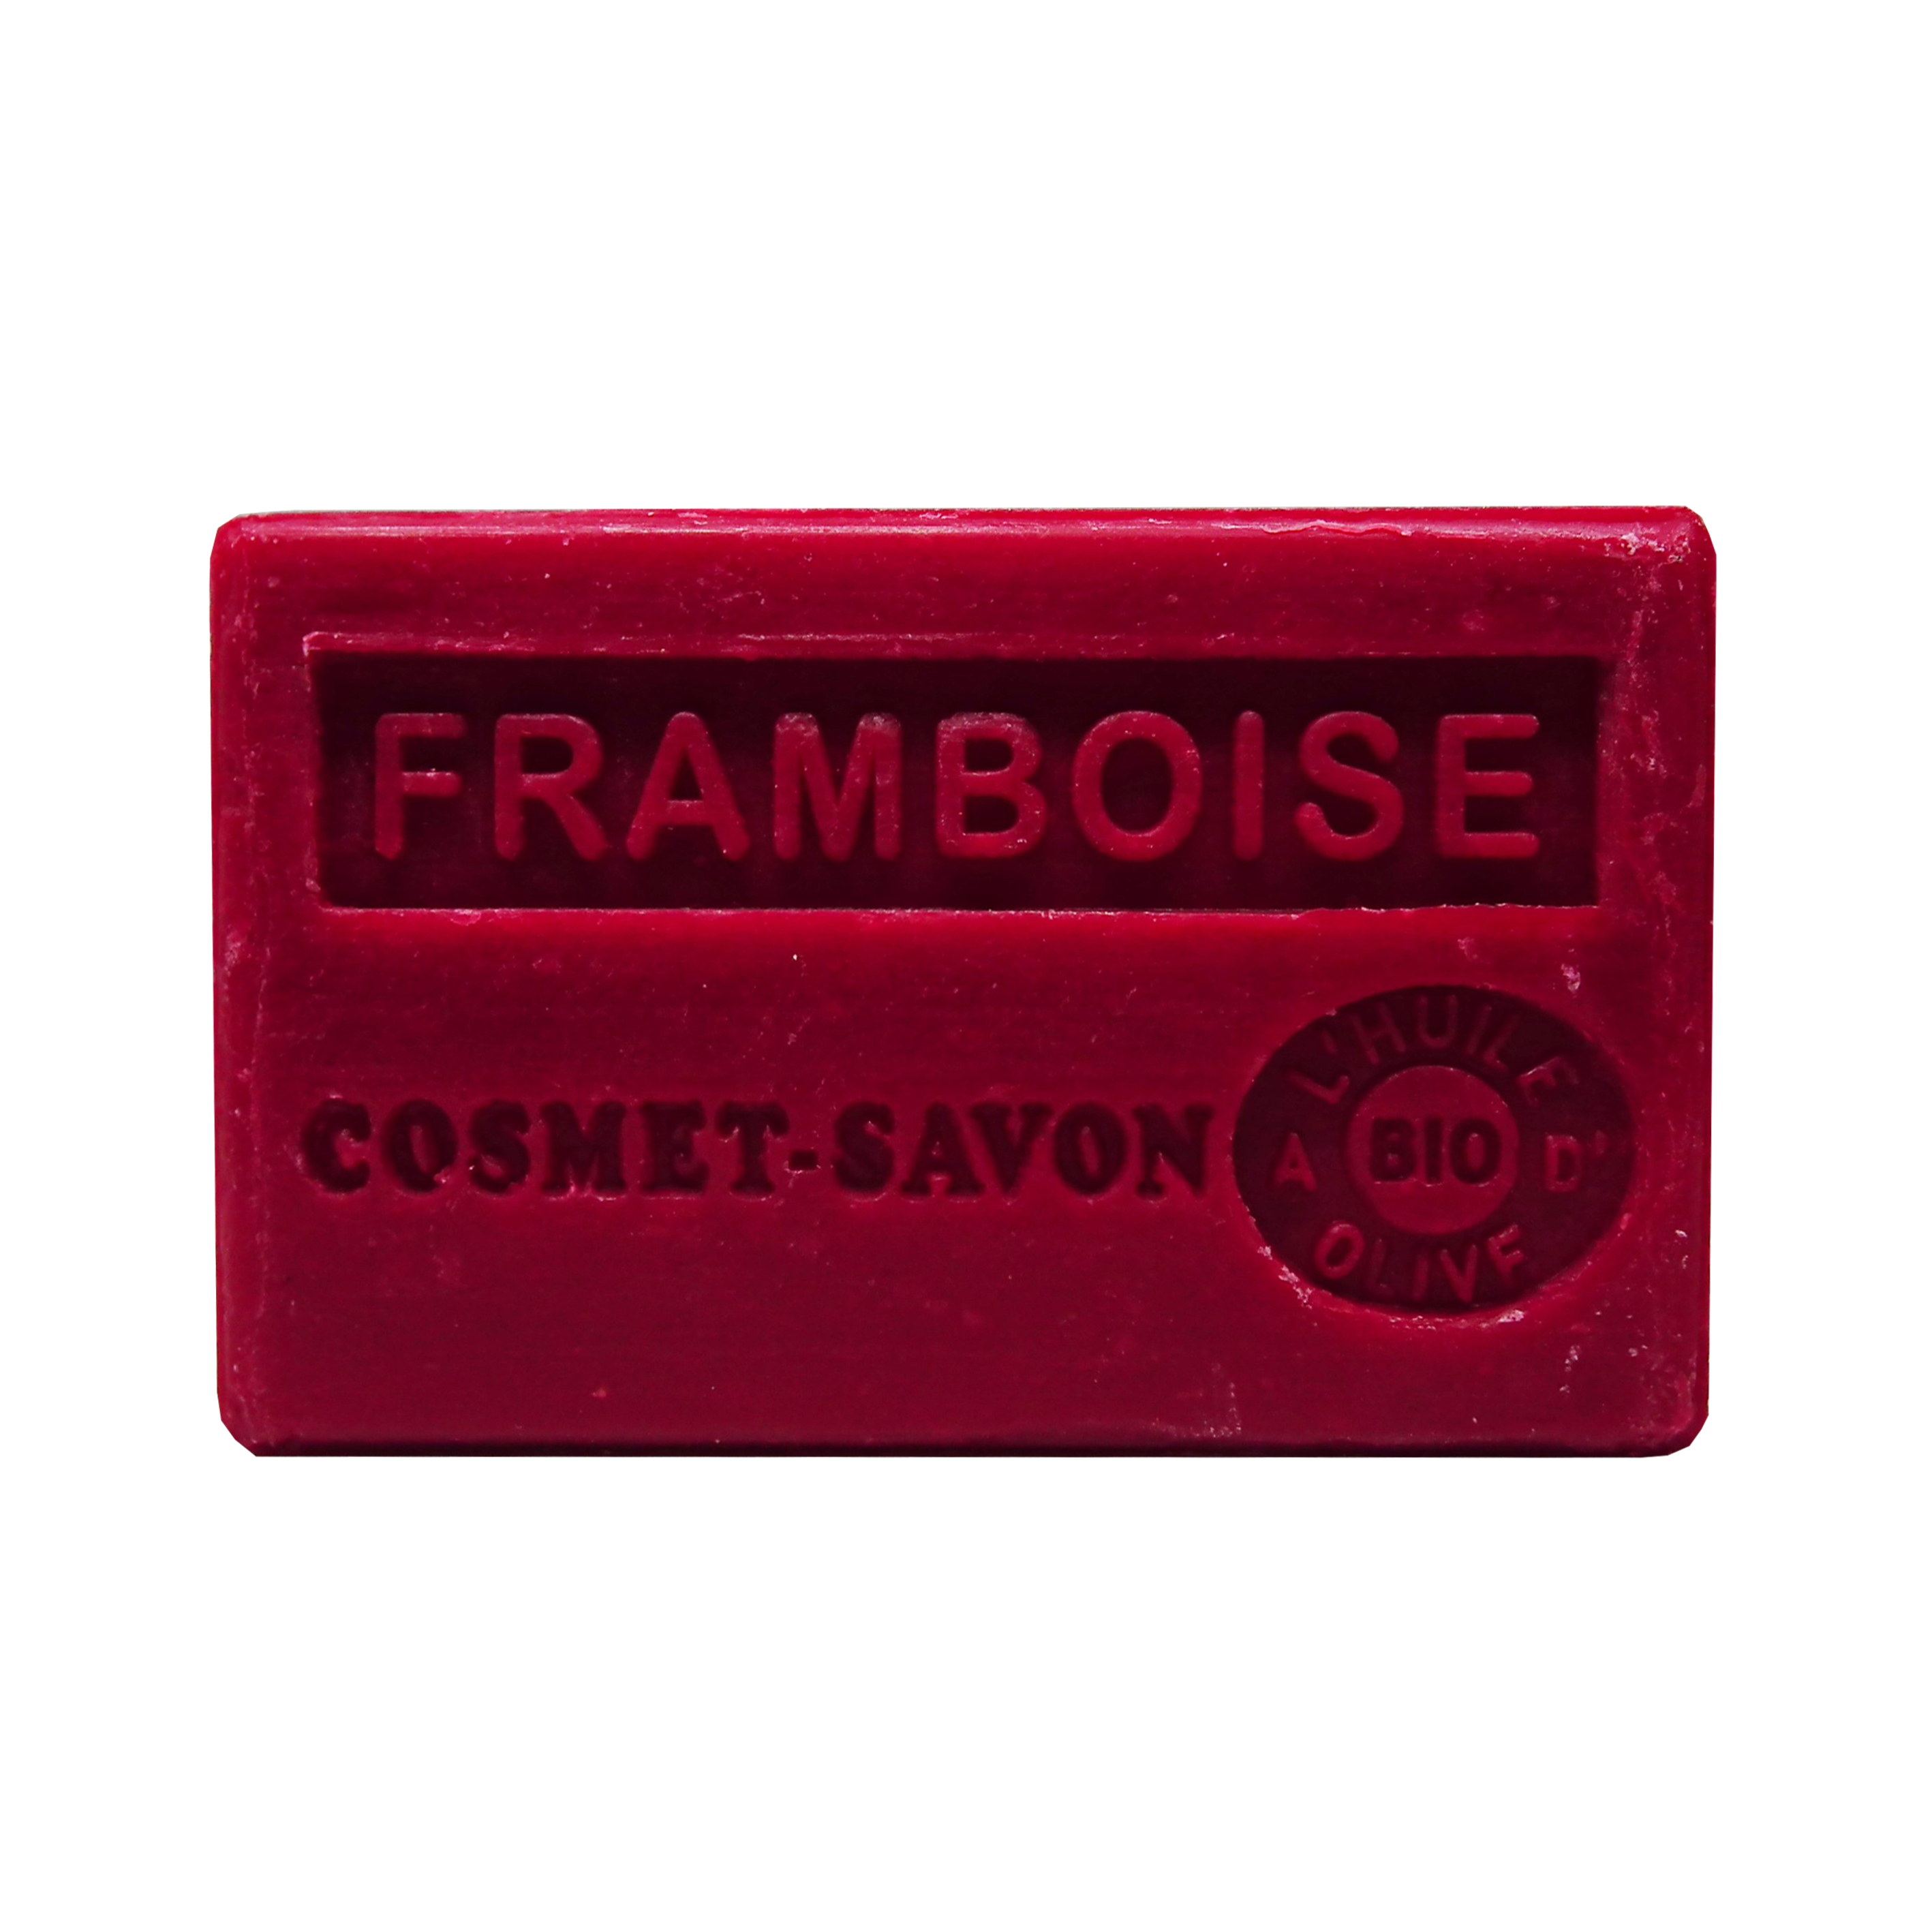 framboise-savon-125gr-au-beurre-de-karite-bio-cosmet-savon-3665205006331-face-JPEG